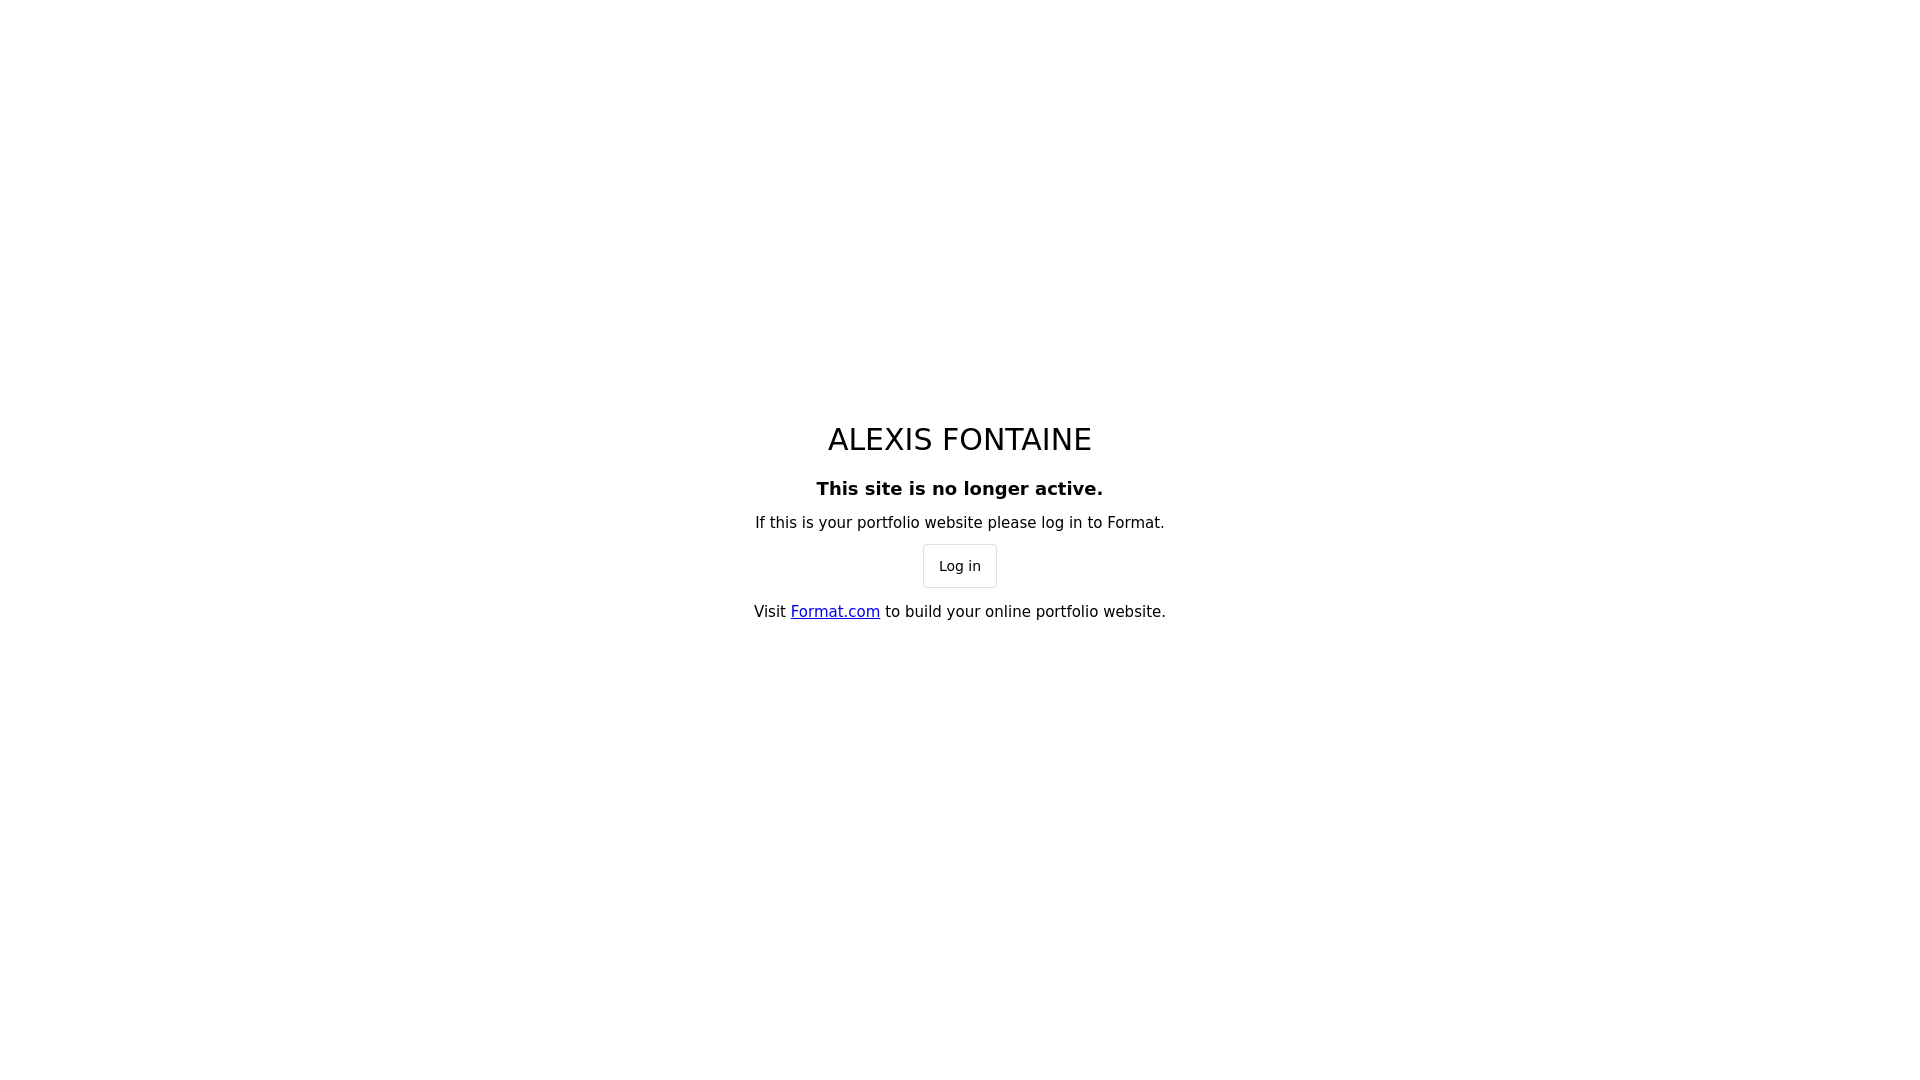 Alexis Fontaine desktop